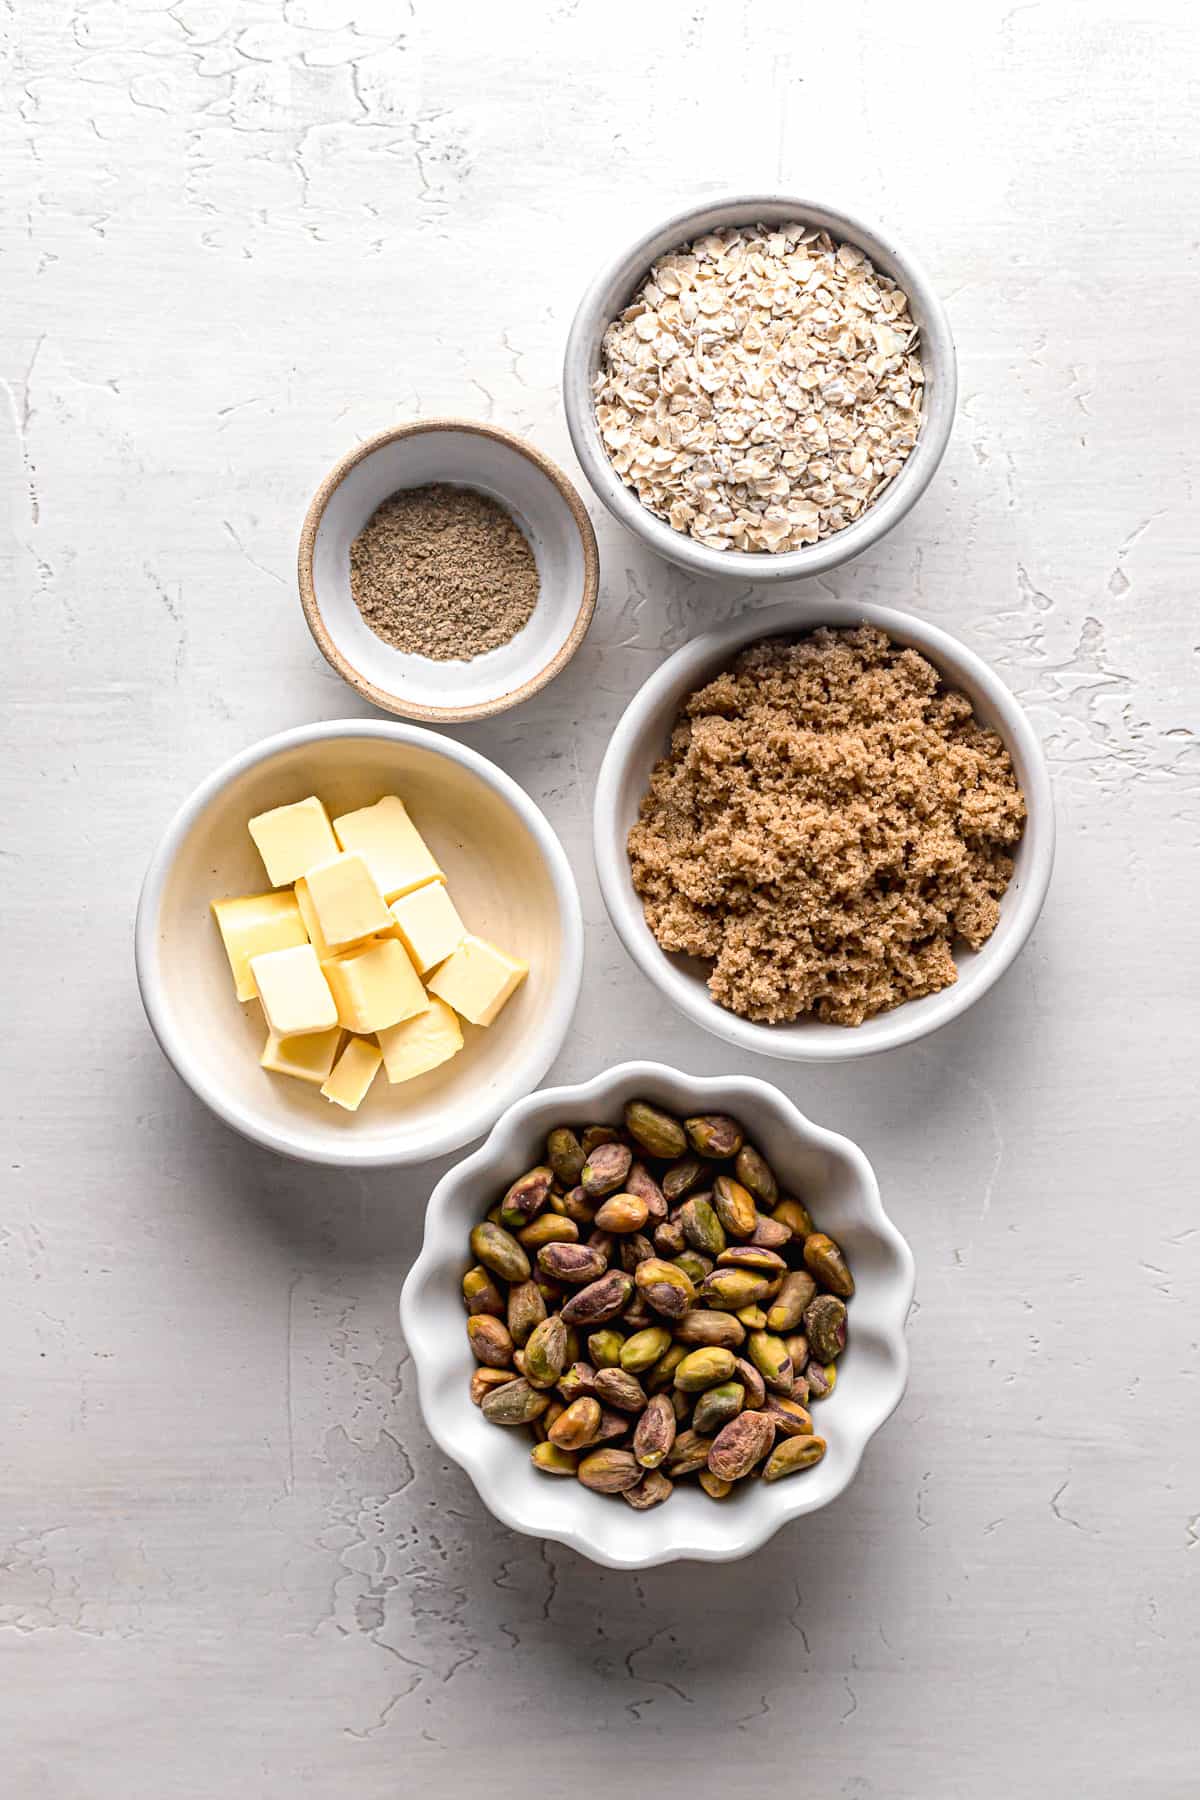 ingredients for oat streusel.